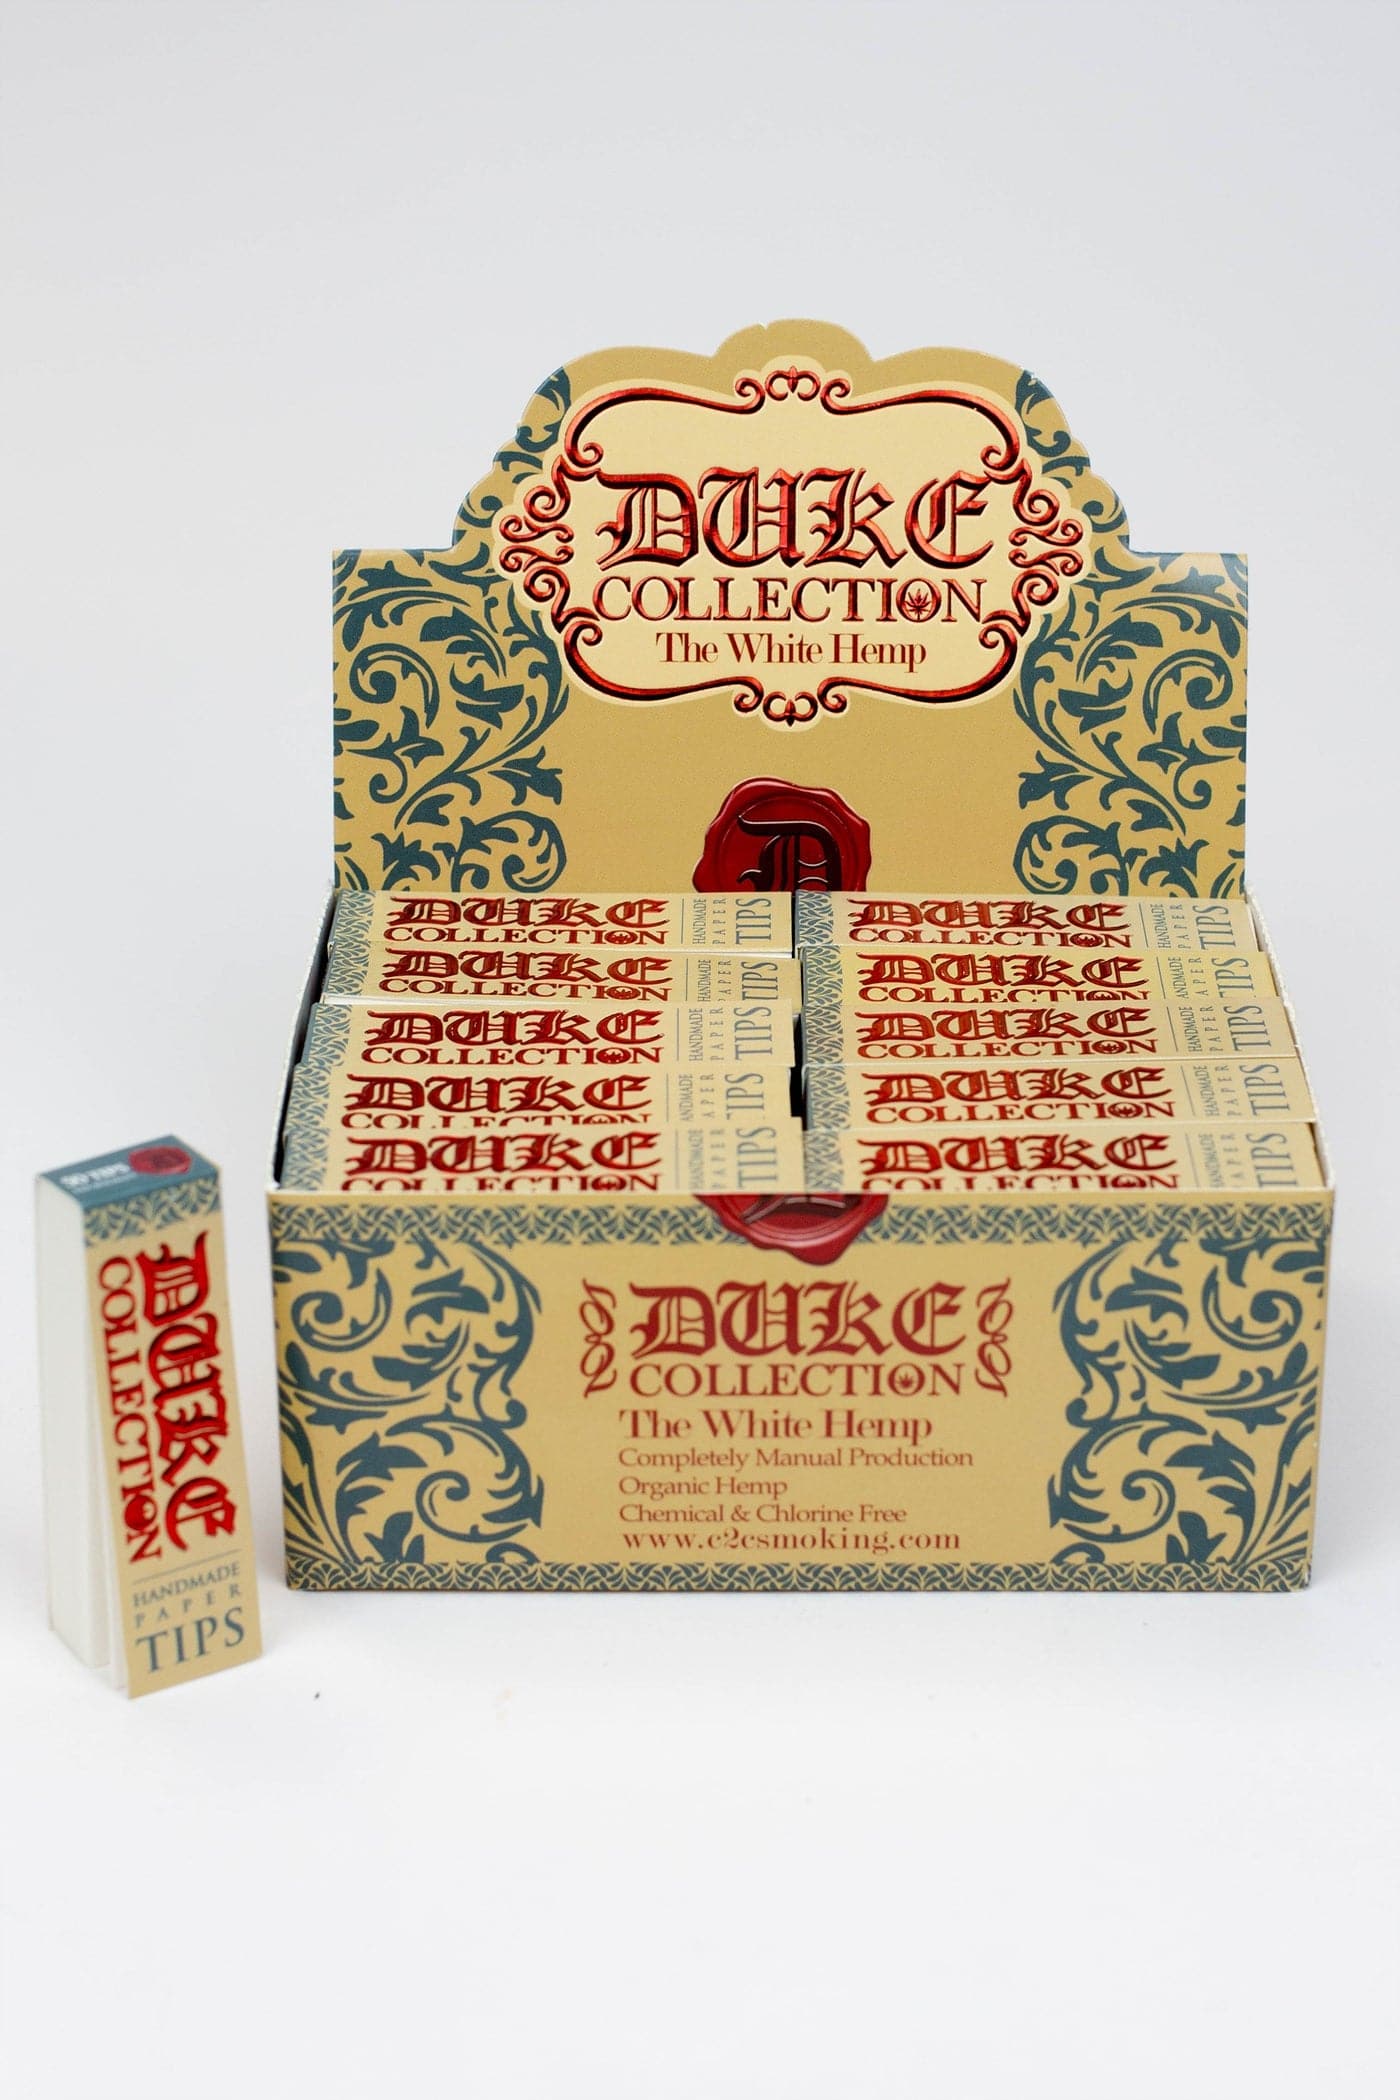 DUKE collection Handmade Paper Tips Box of 50